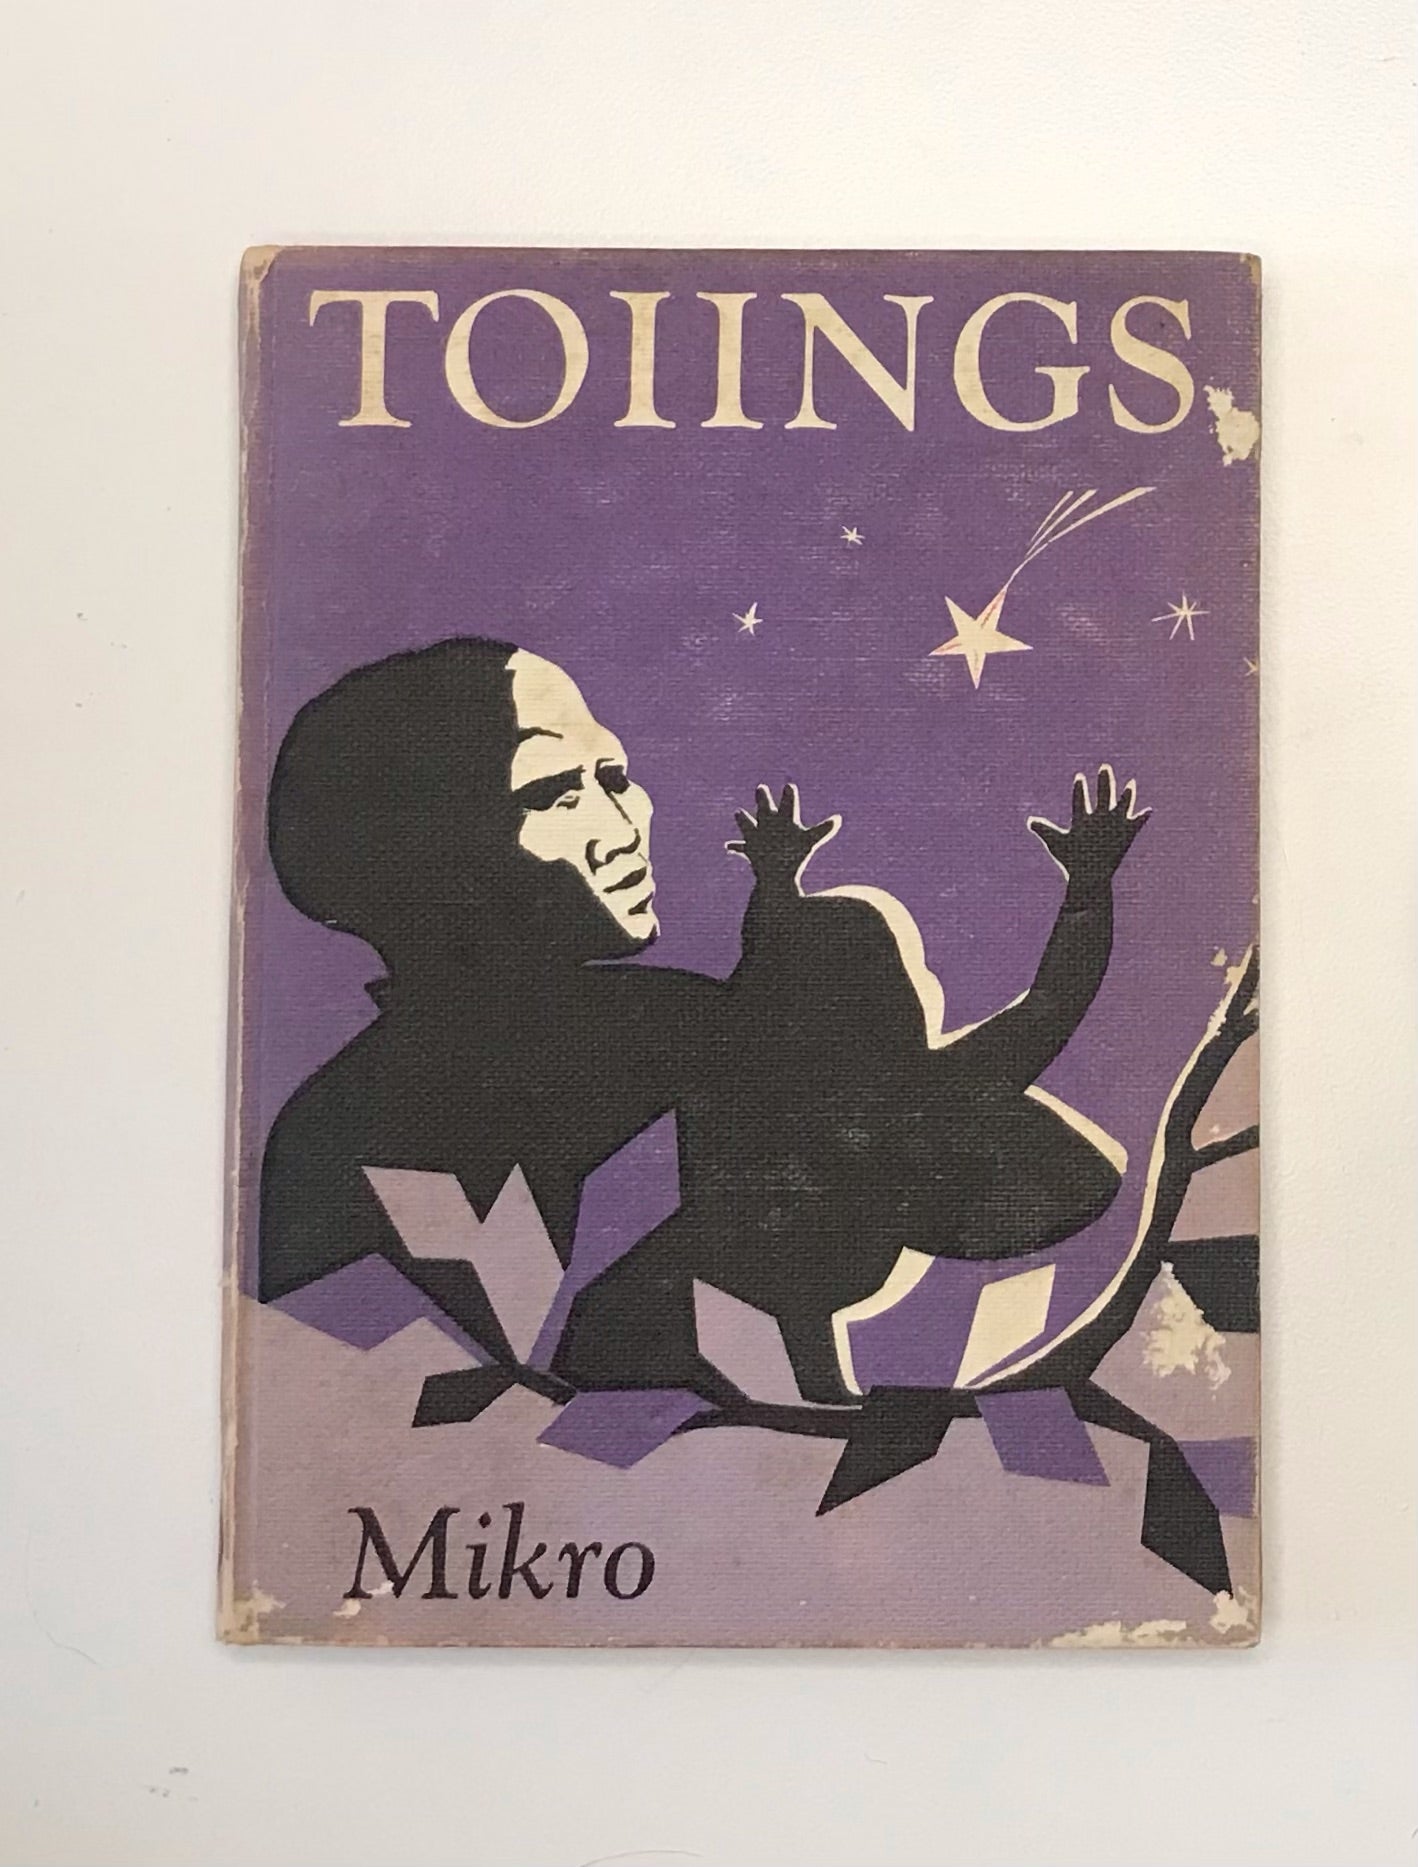 Toiings - Mikro